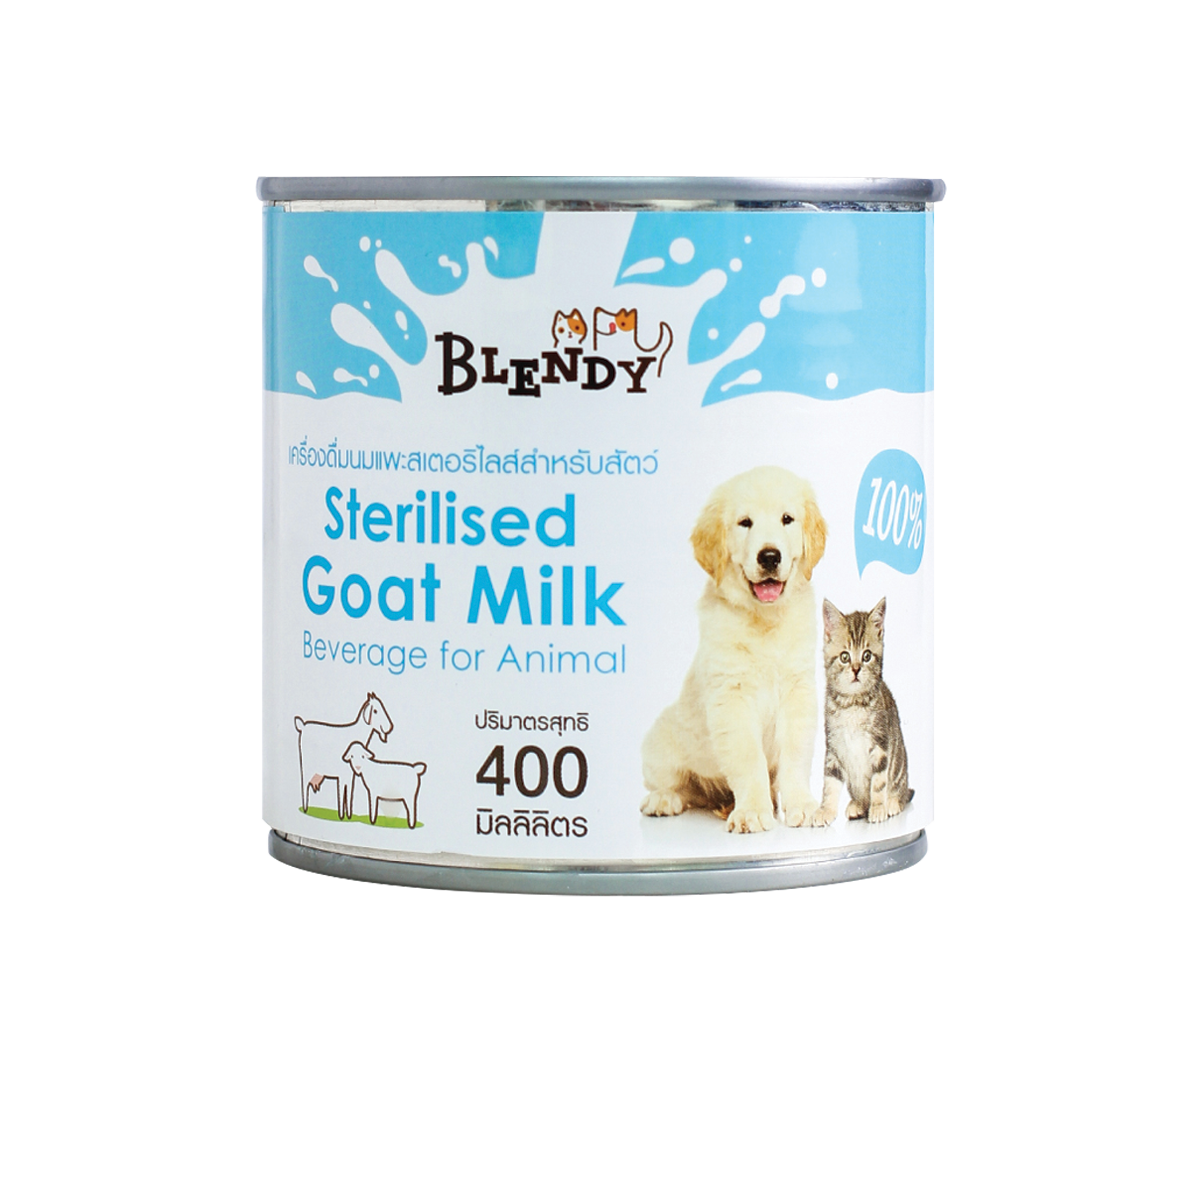 Blendy Sterilised Goat Milk Beverage for Animal เบรนดี้ นมแพะสเตอริไลส์แท้ สำหรับสุนัขและแมวทุกวัย ขนาด 400 มิลลิลิตร